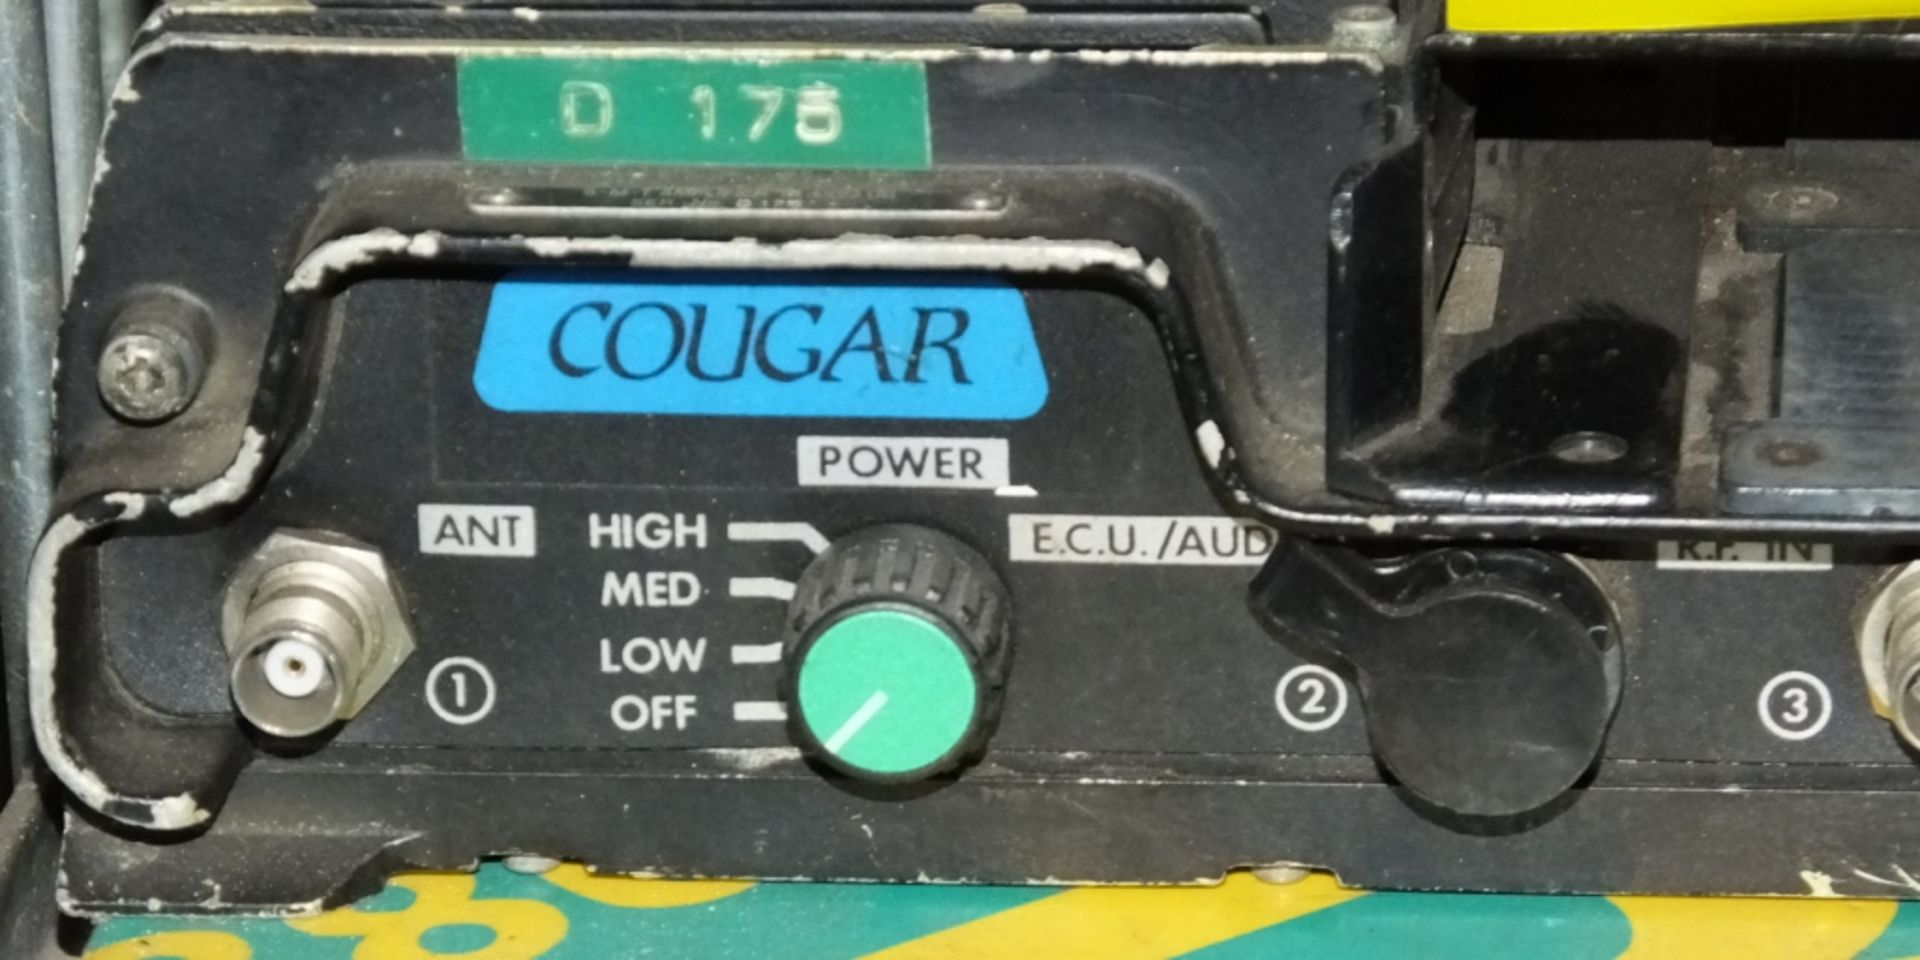 Racal Cougar UHF radio SMT Amplifier - Image 2 of 2